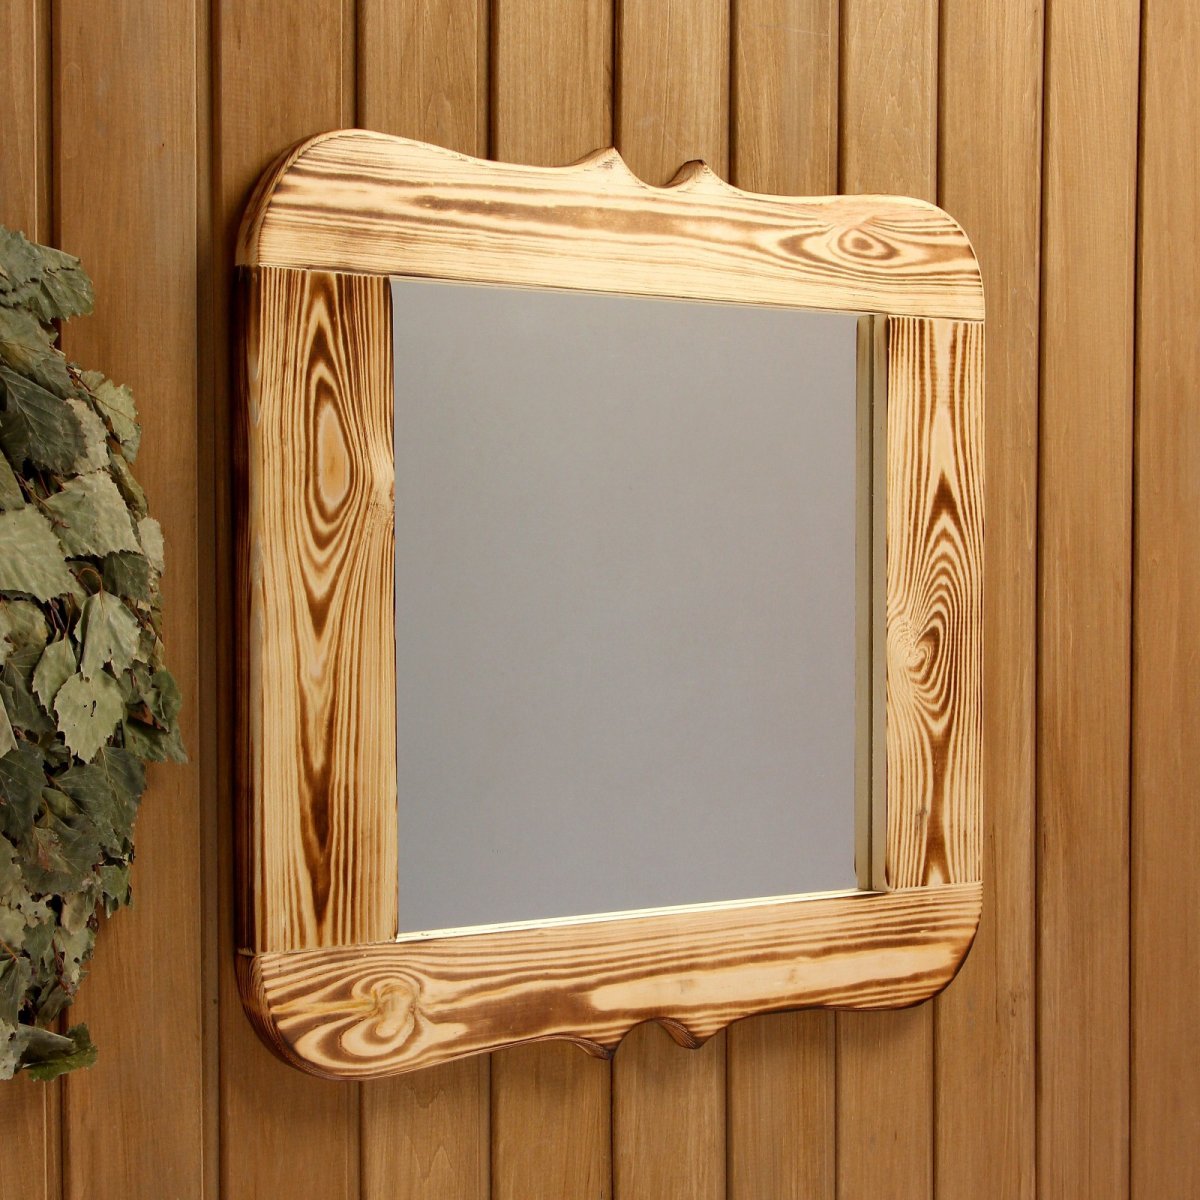 Рамка для зеркала из дерева своими руками